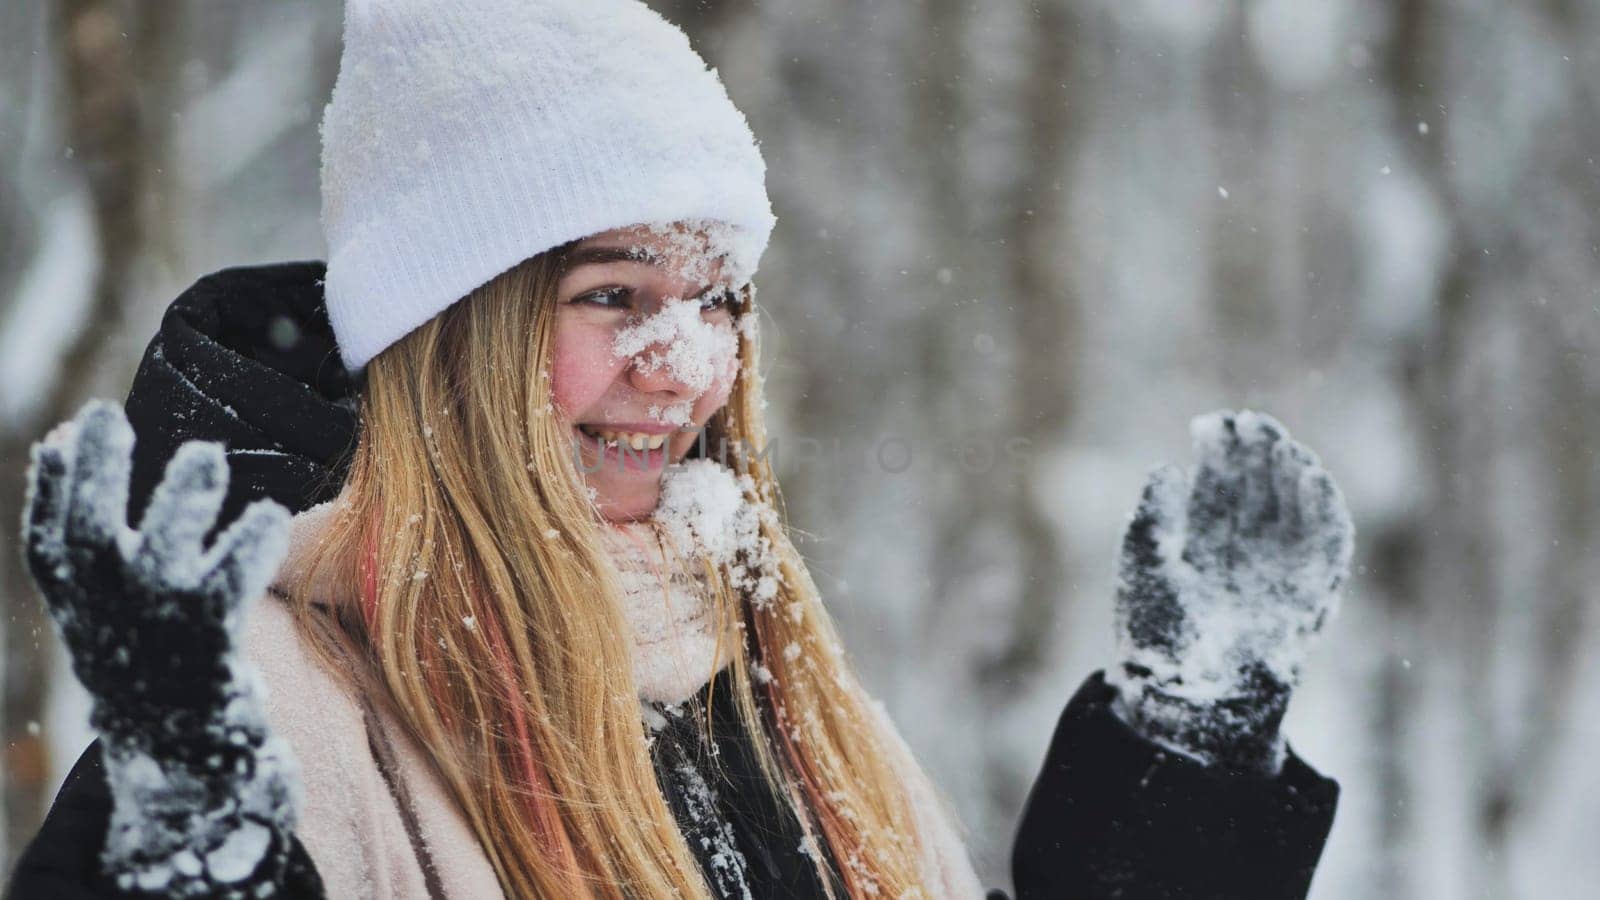 Teenage girl playing with snow